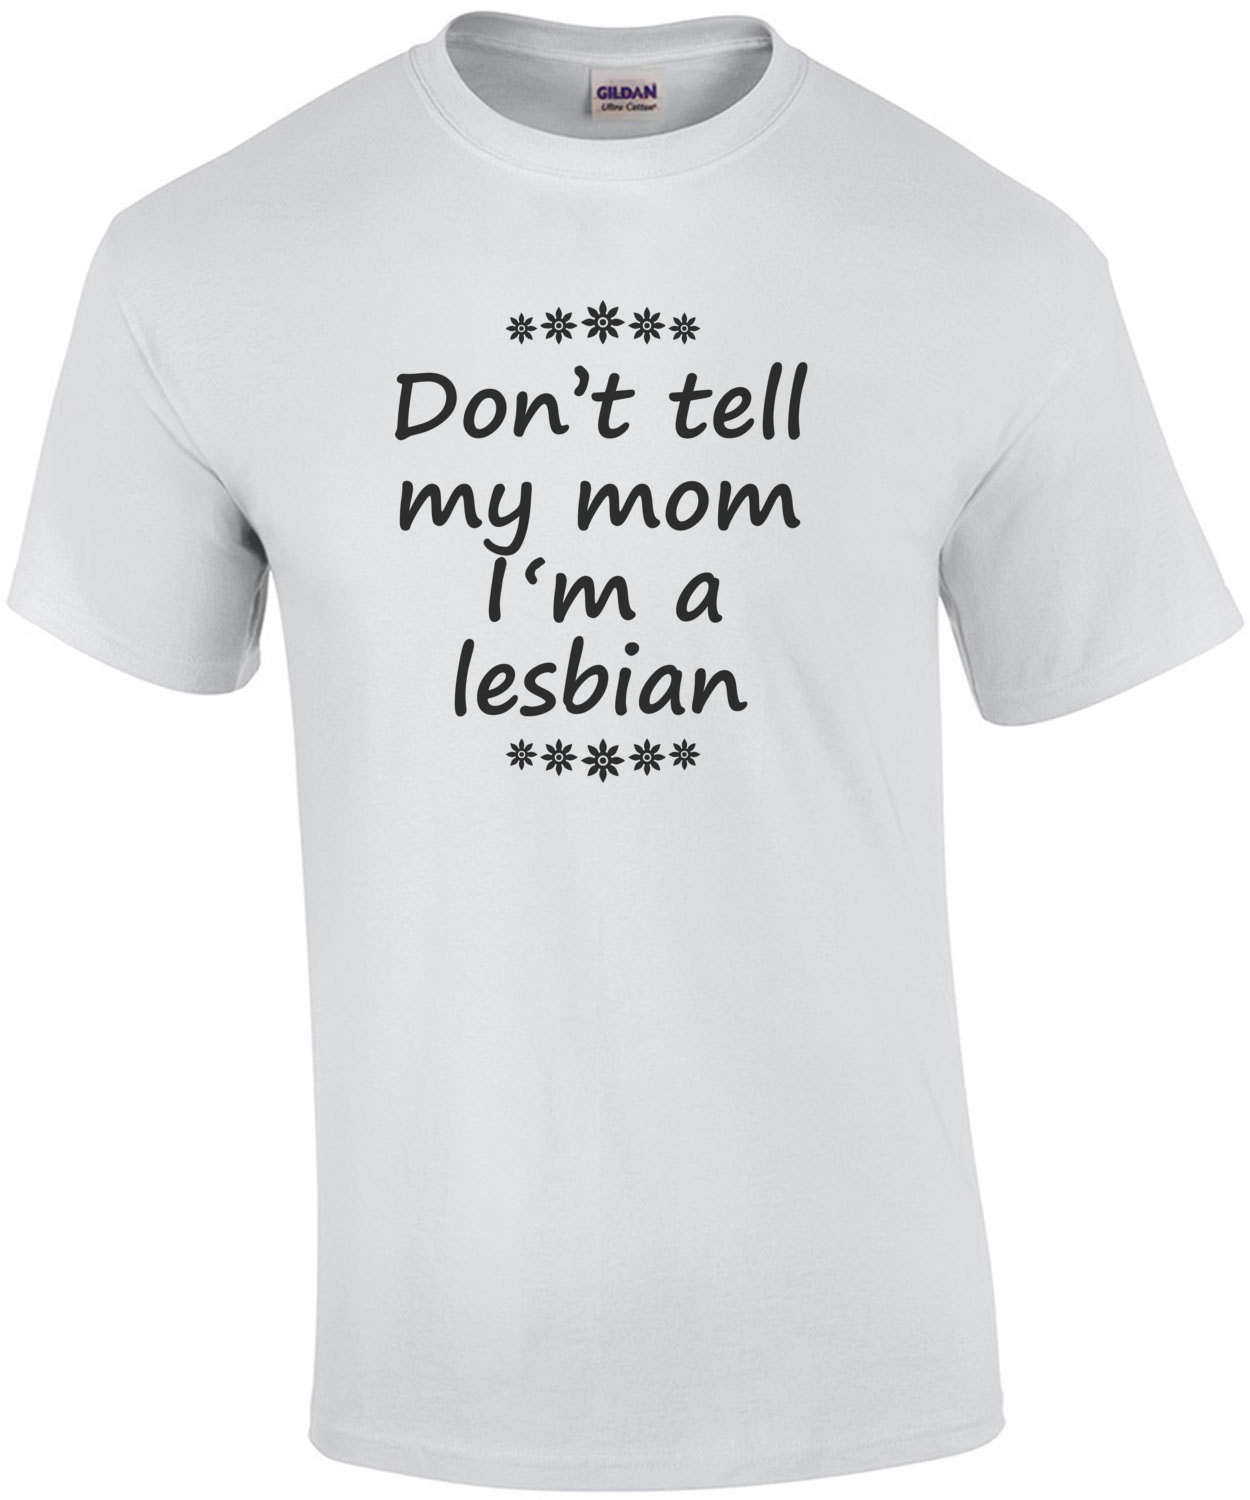 Don't tell my mom I'm a lesbian - funny t-shirt